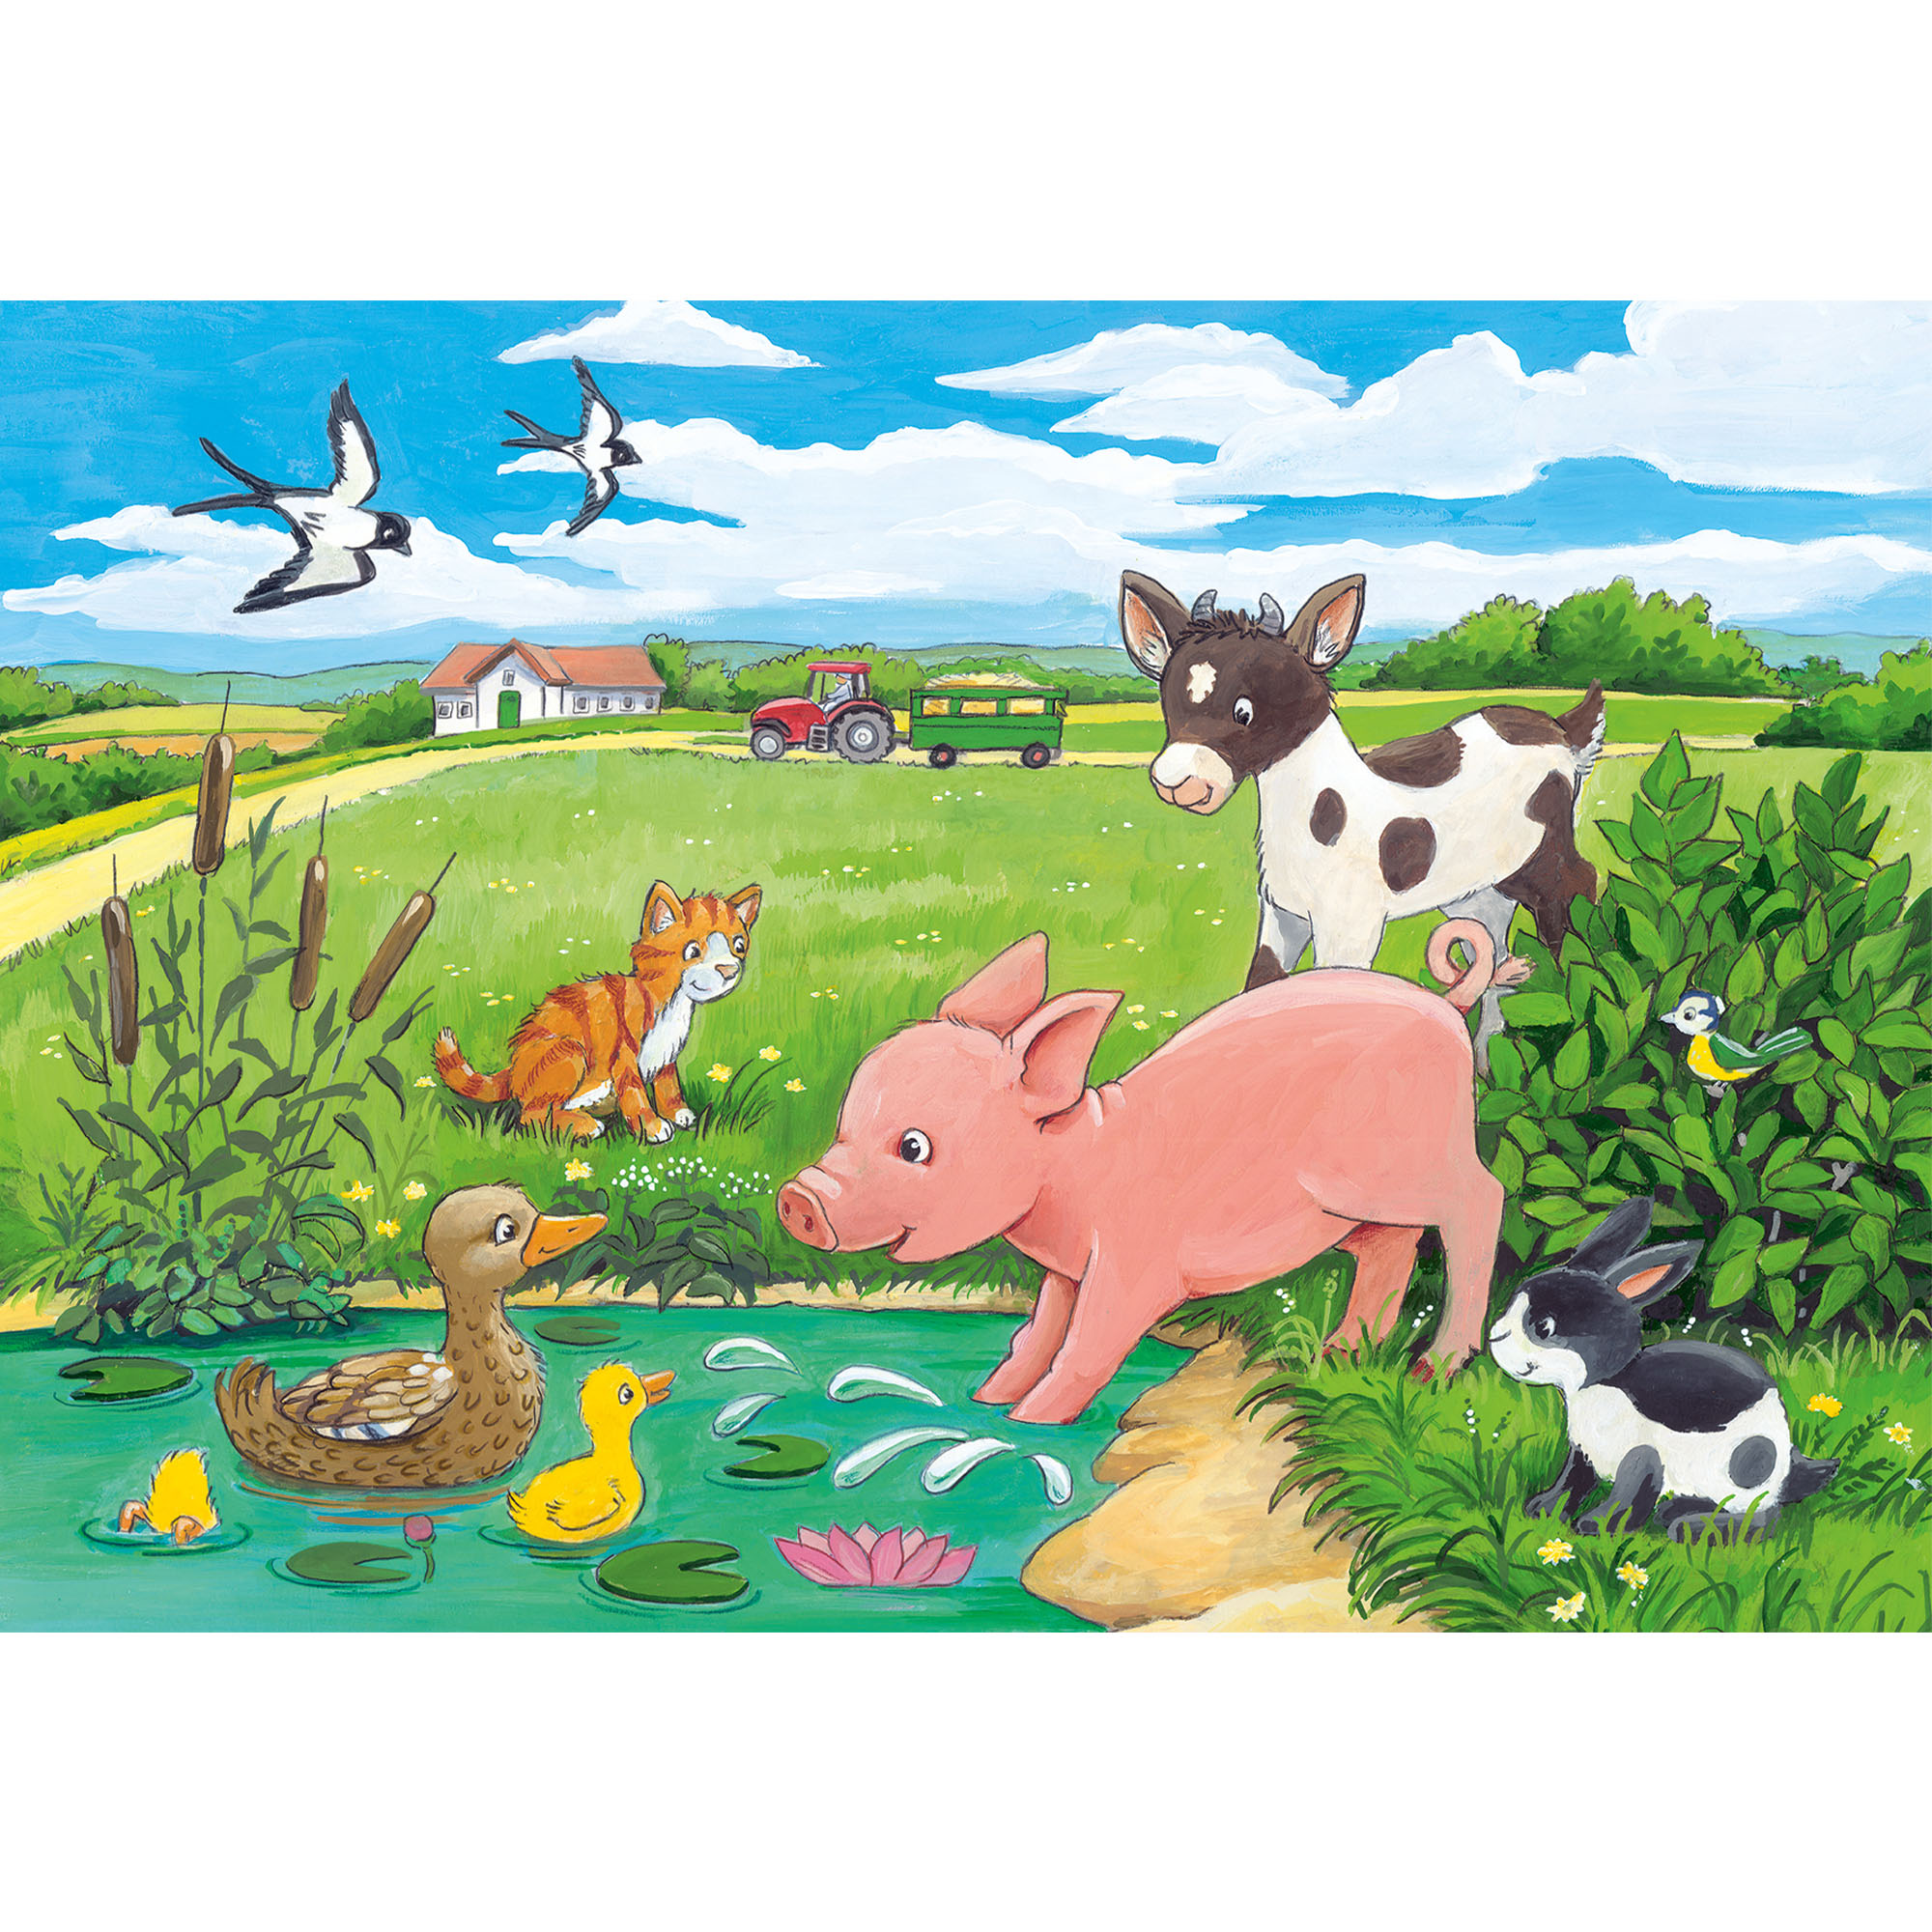 Ravensburger Puzzle 2x12 pezzi 07582 - Cuccioli di campagna, , large